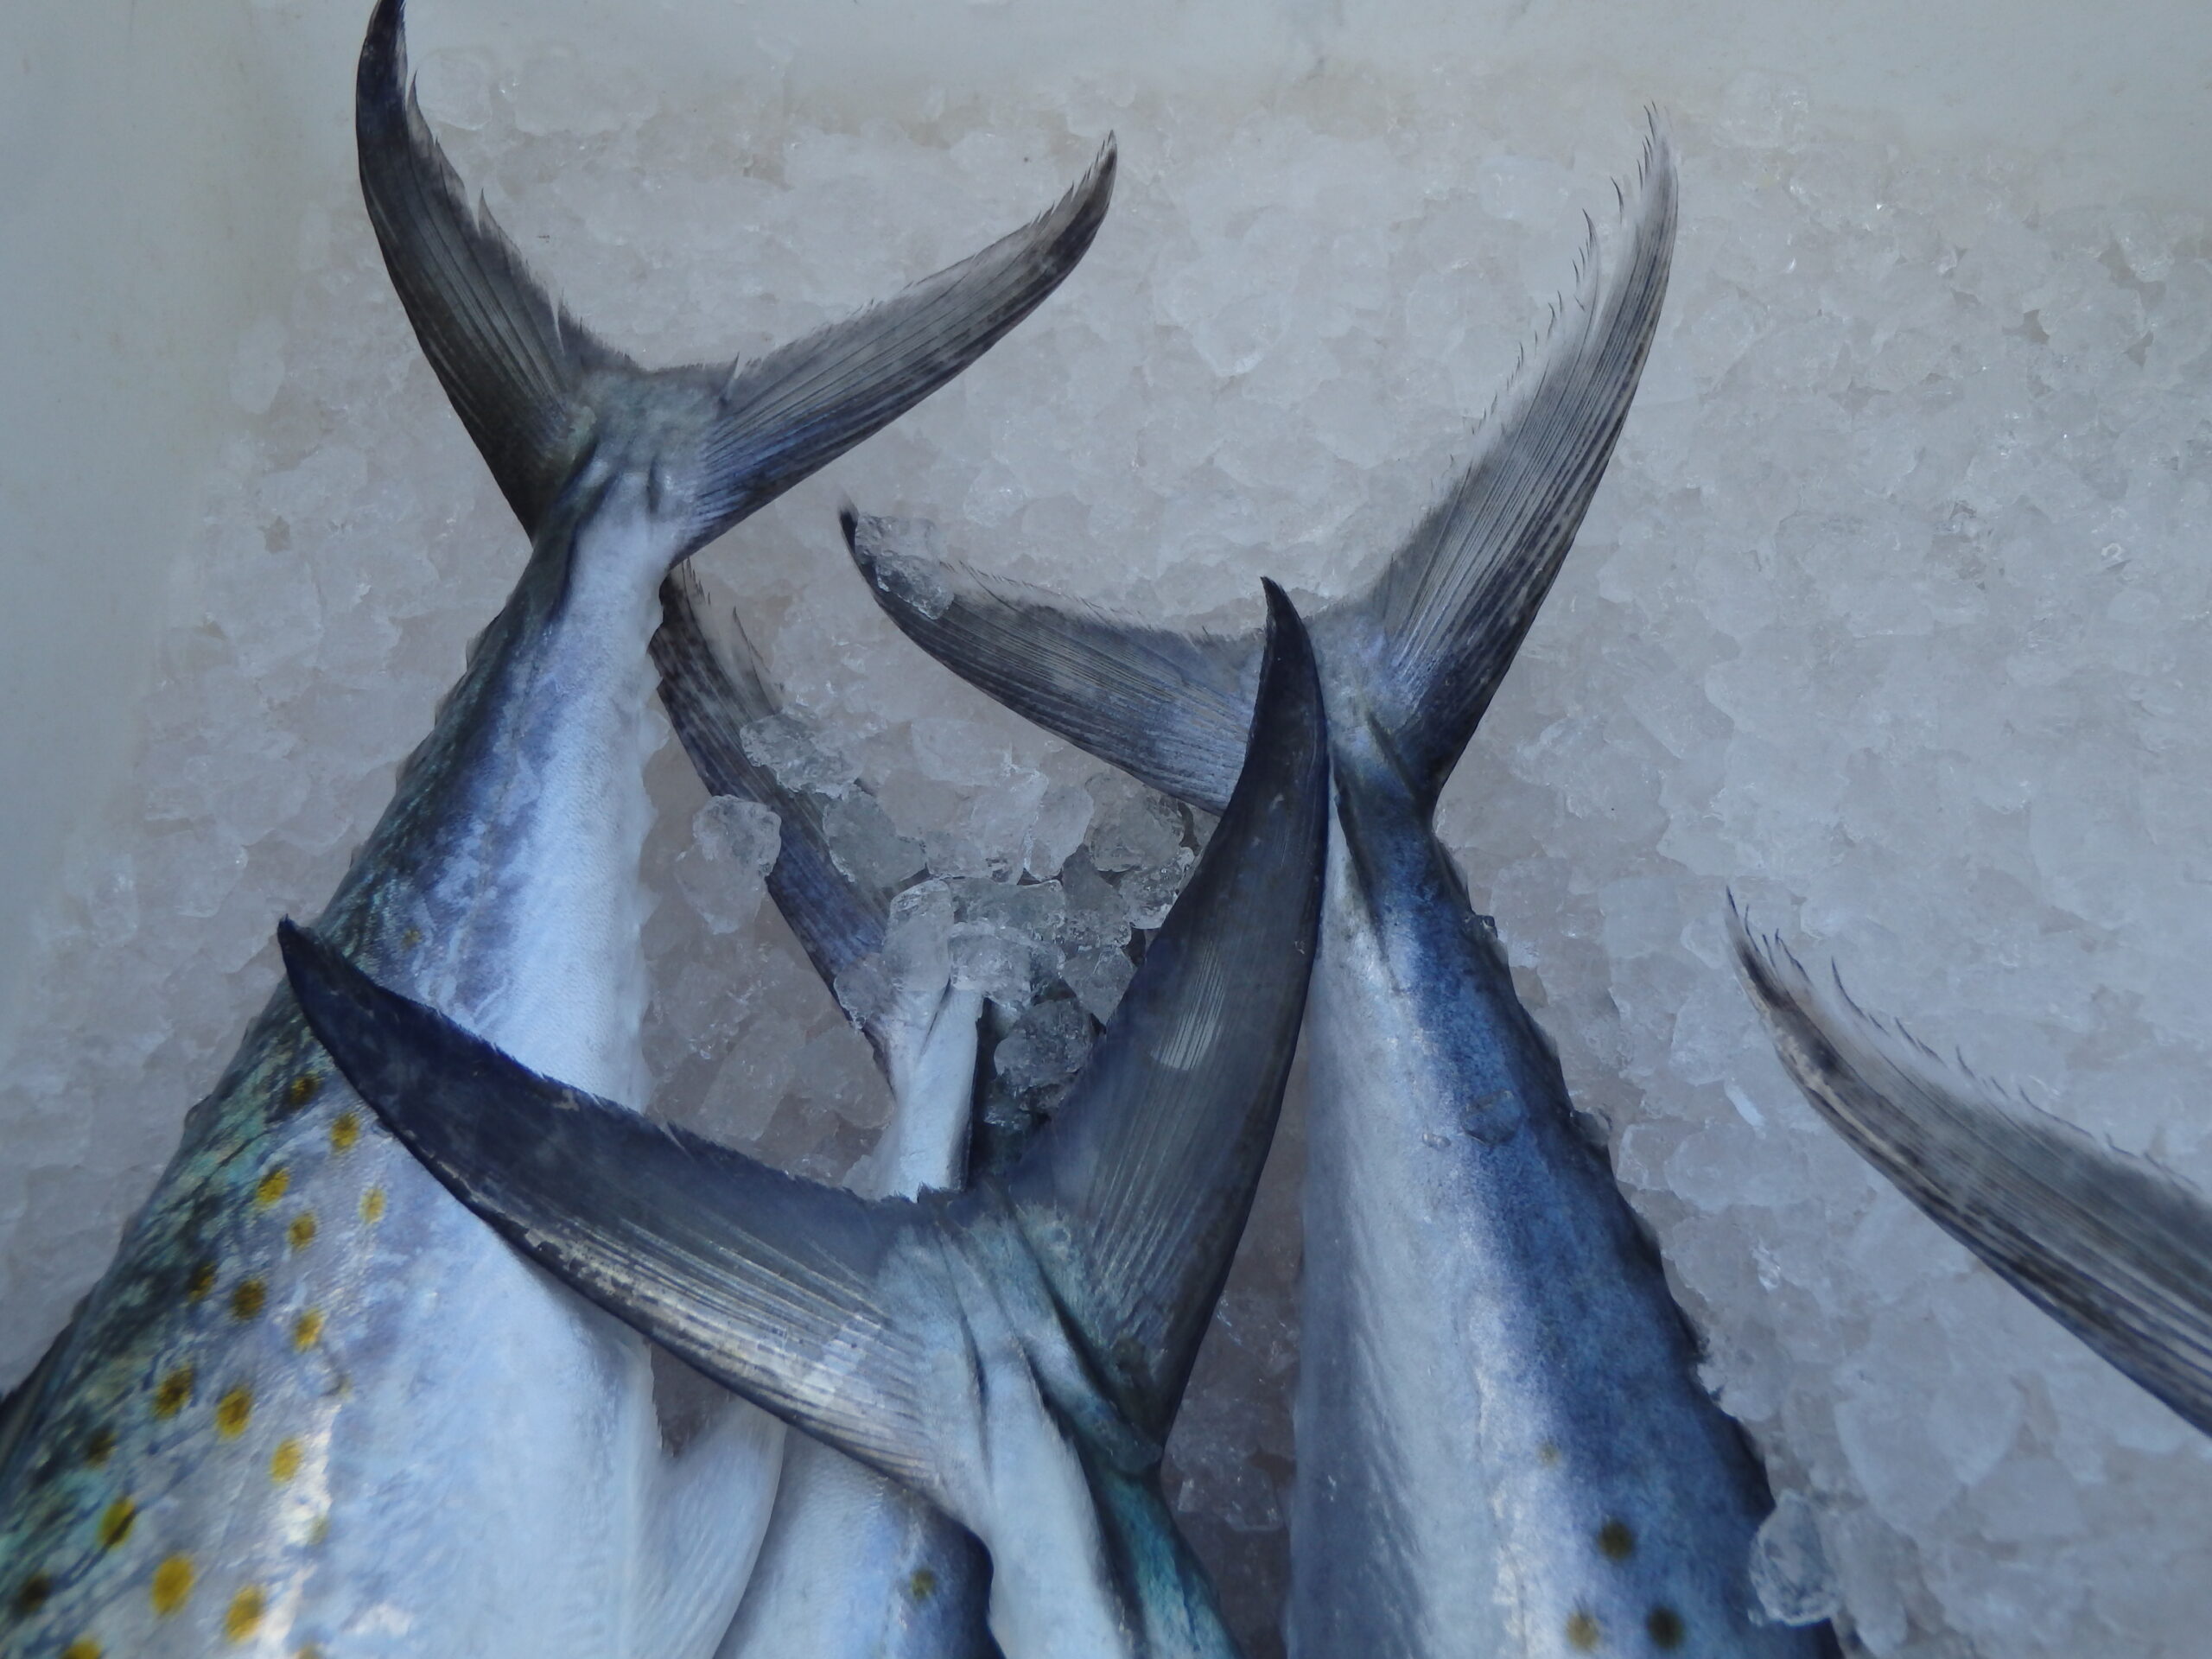 spanish mackerel tails